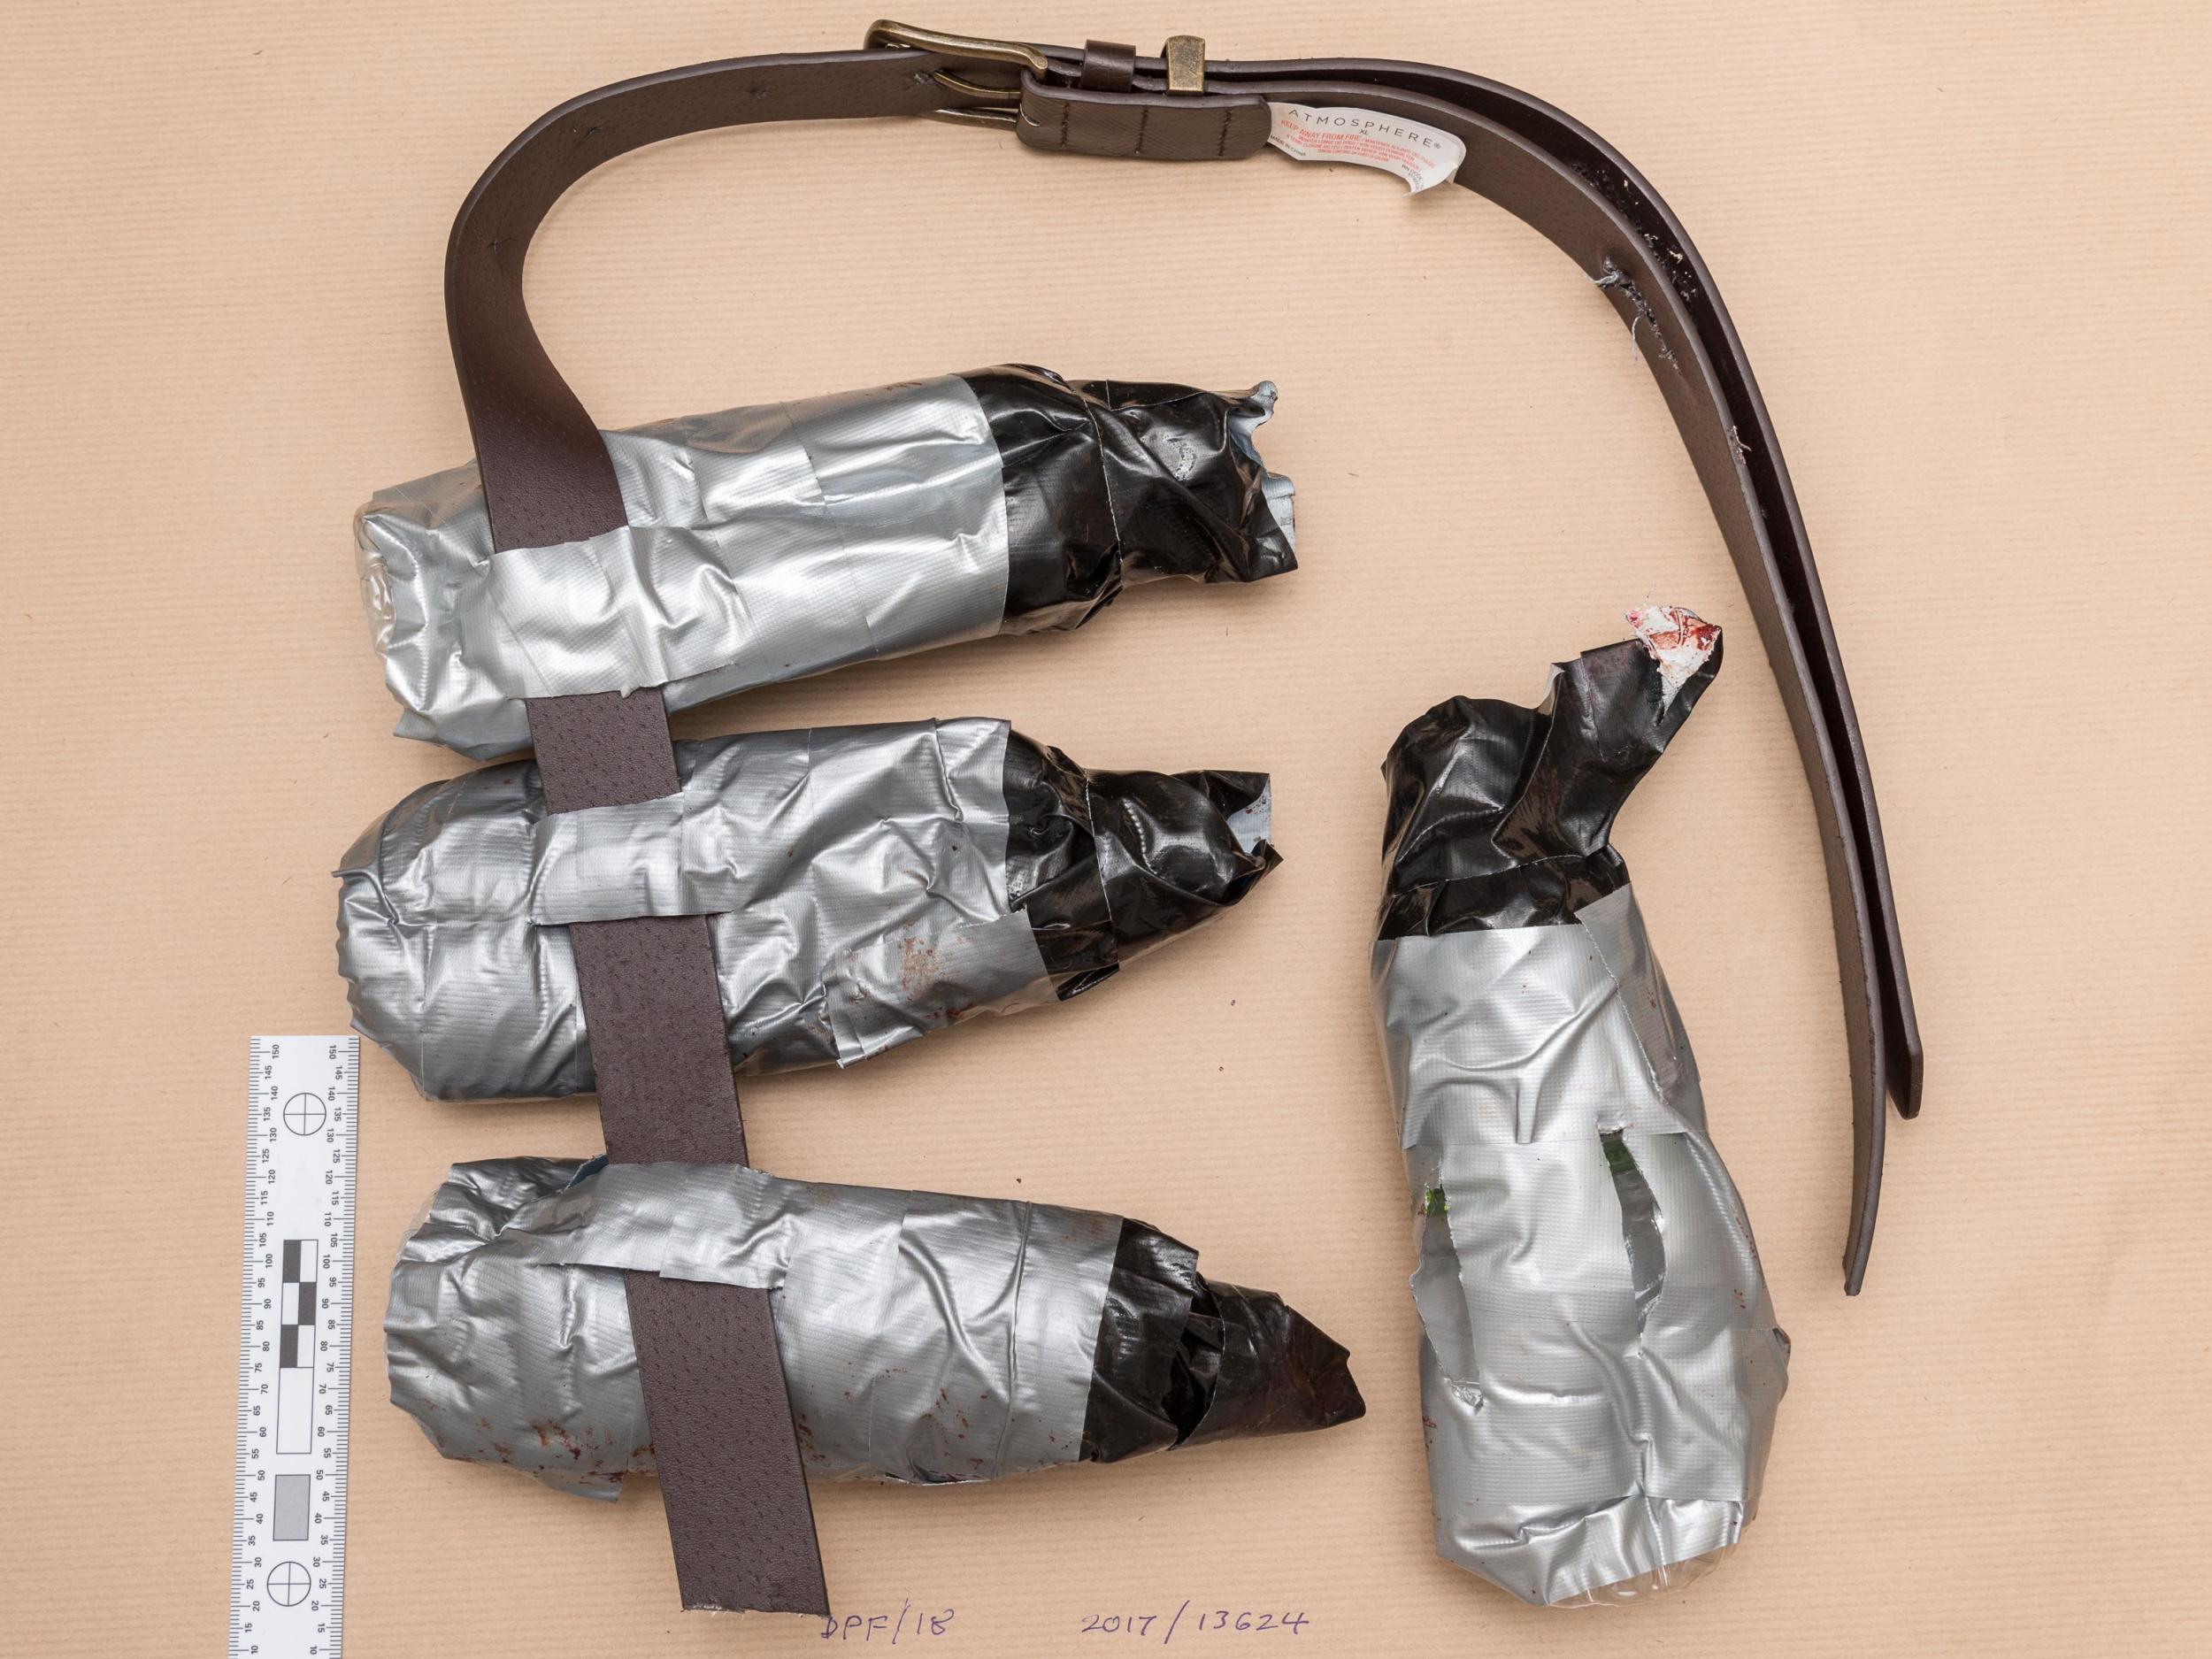 Fake explosive belt used in the London Bridge attack